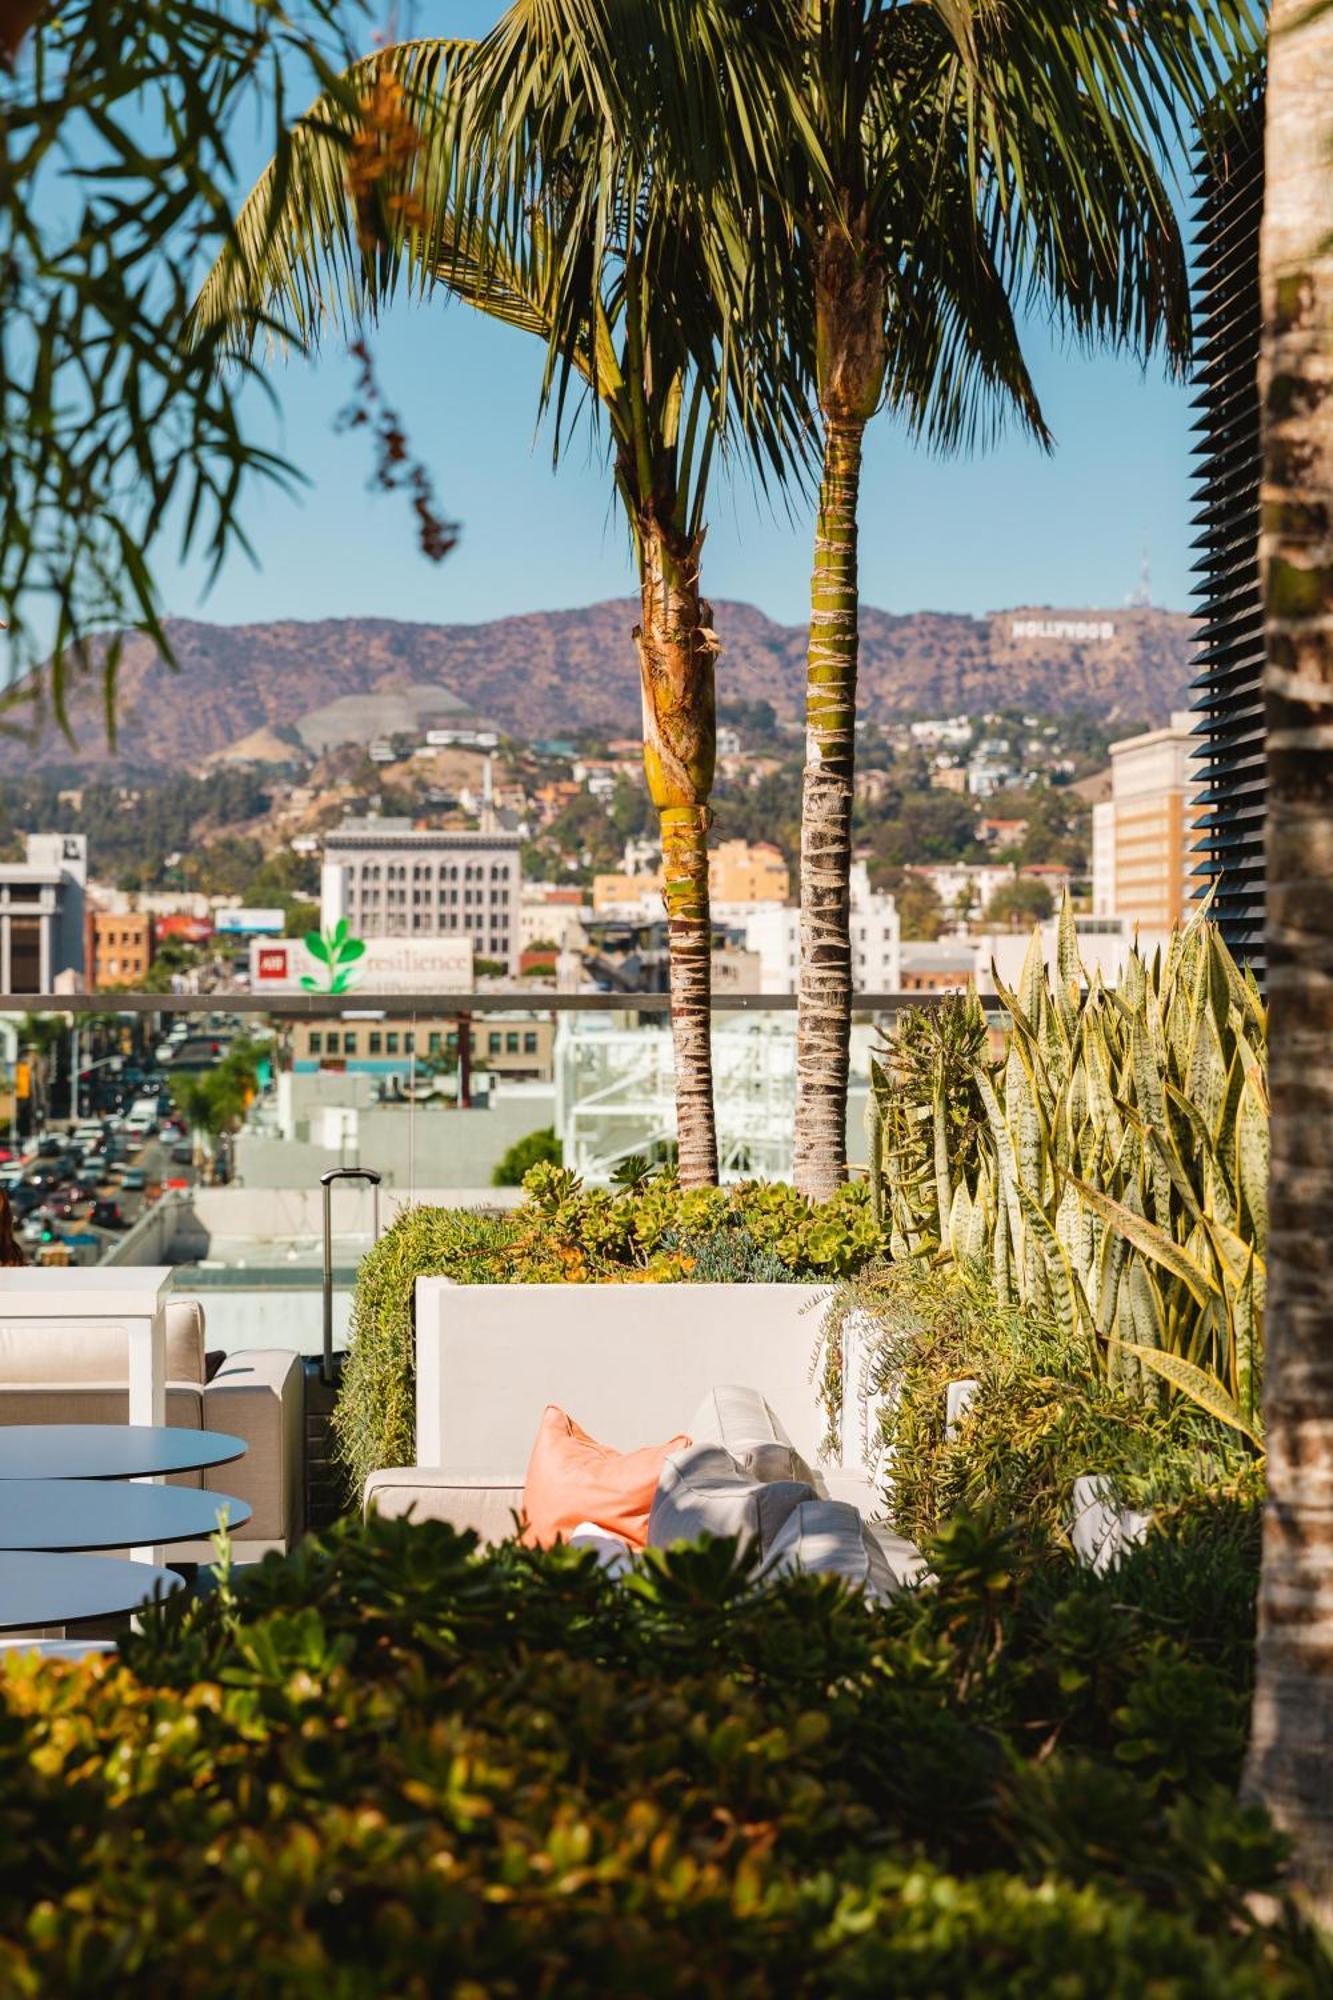 The Godfrey Hotel Hollywood Los Ángeles Exterior foto